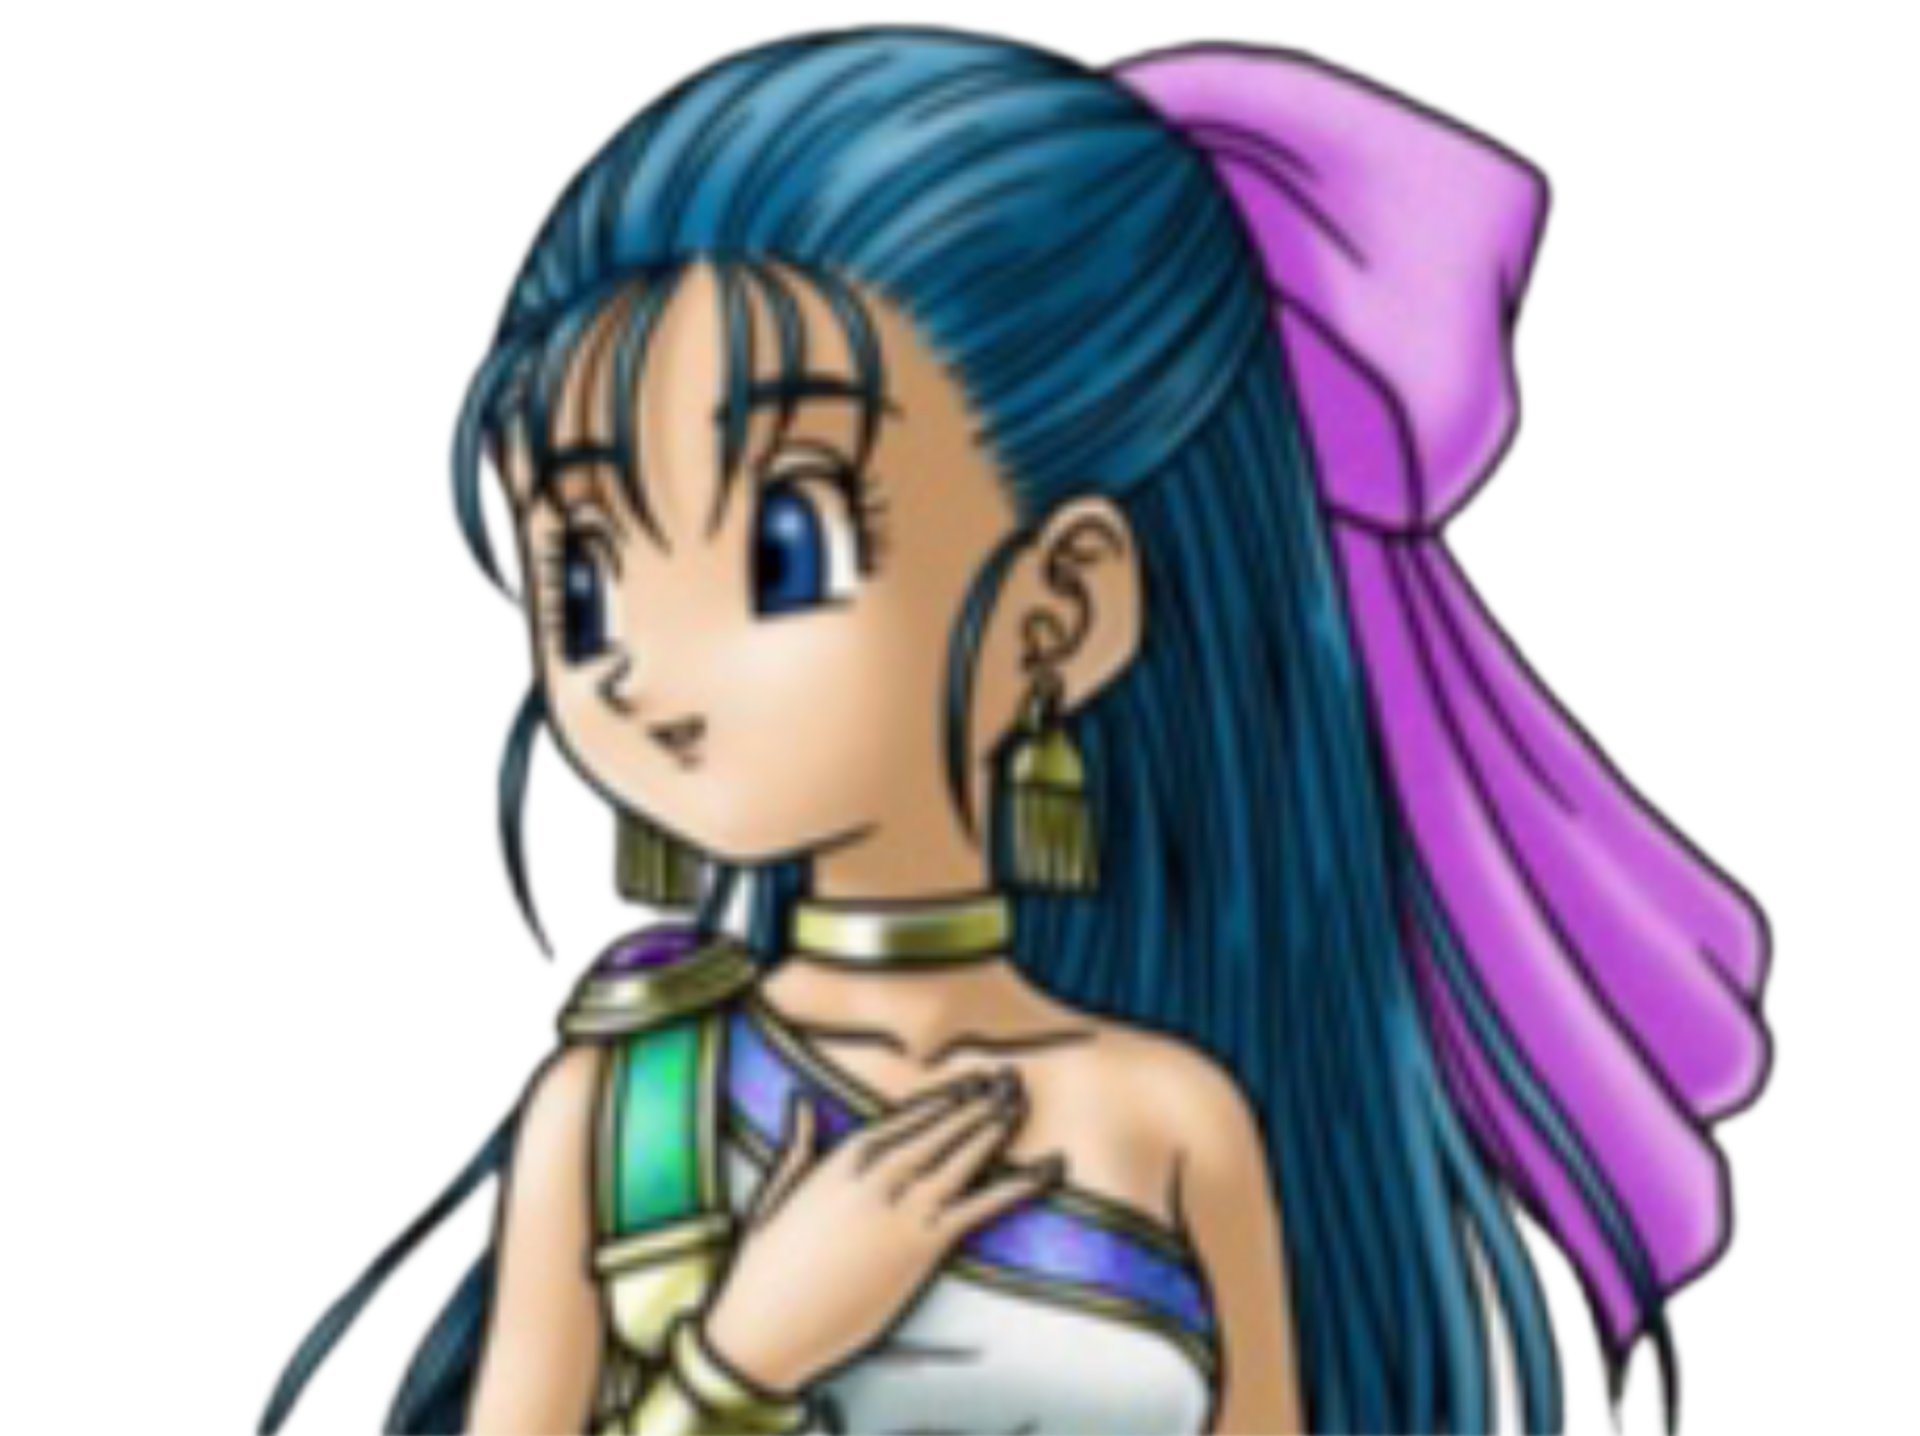 Sticker De Erebos Sur Dragon Quest V Nera Danse Sourire Jeu Video Dqv Ruban Joyeuse Lune Regard